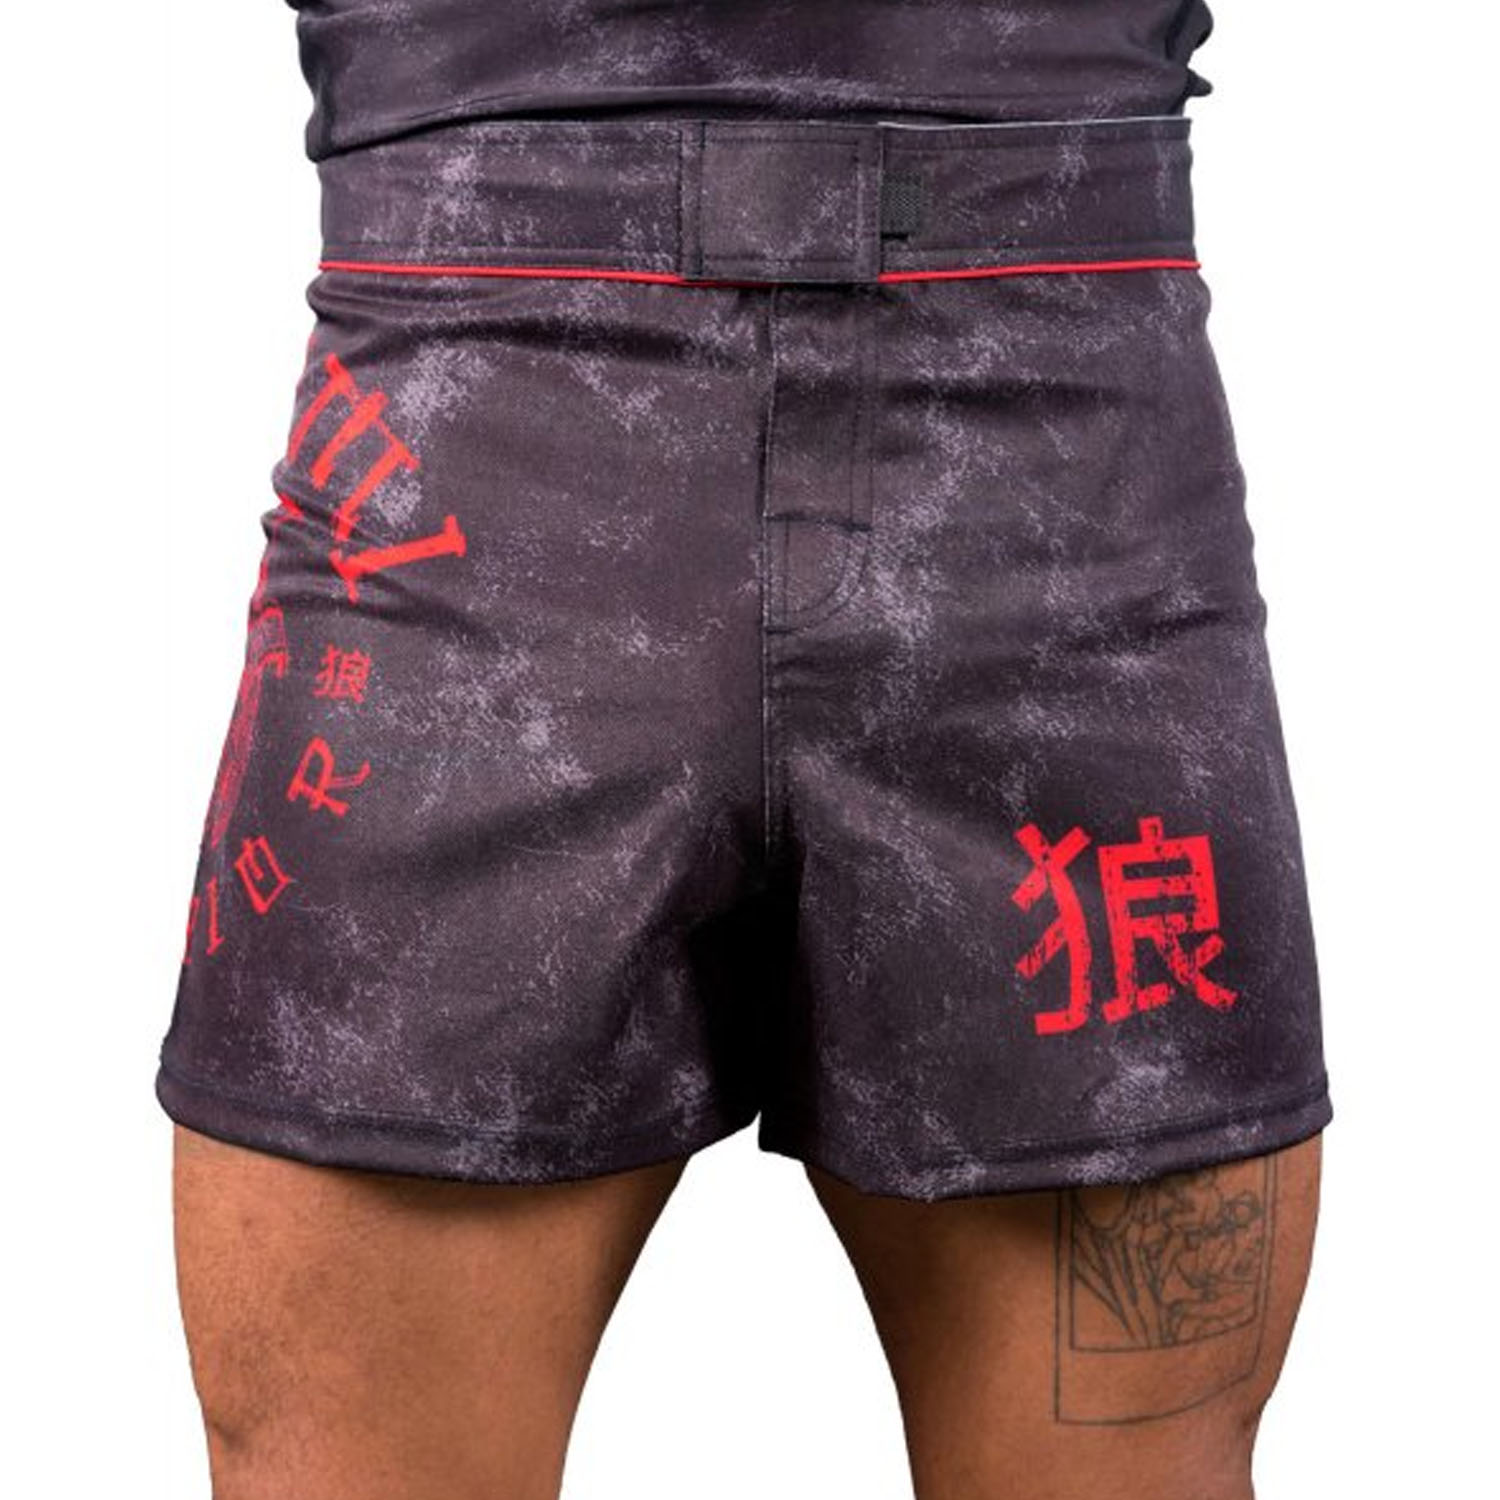 OKAMI MMA Fight Shorts, Warrior, schwarz, XL